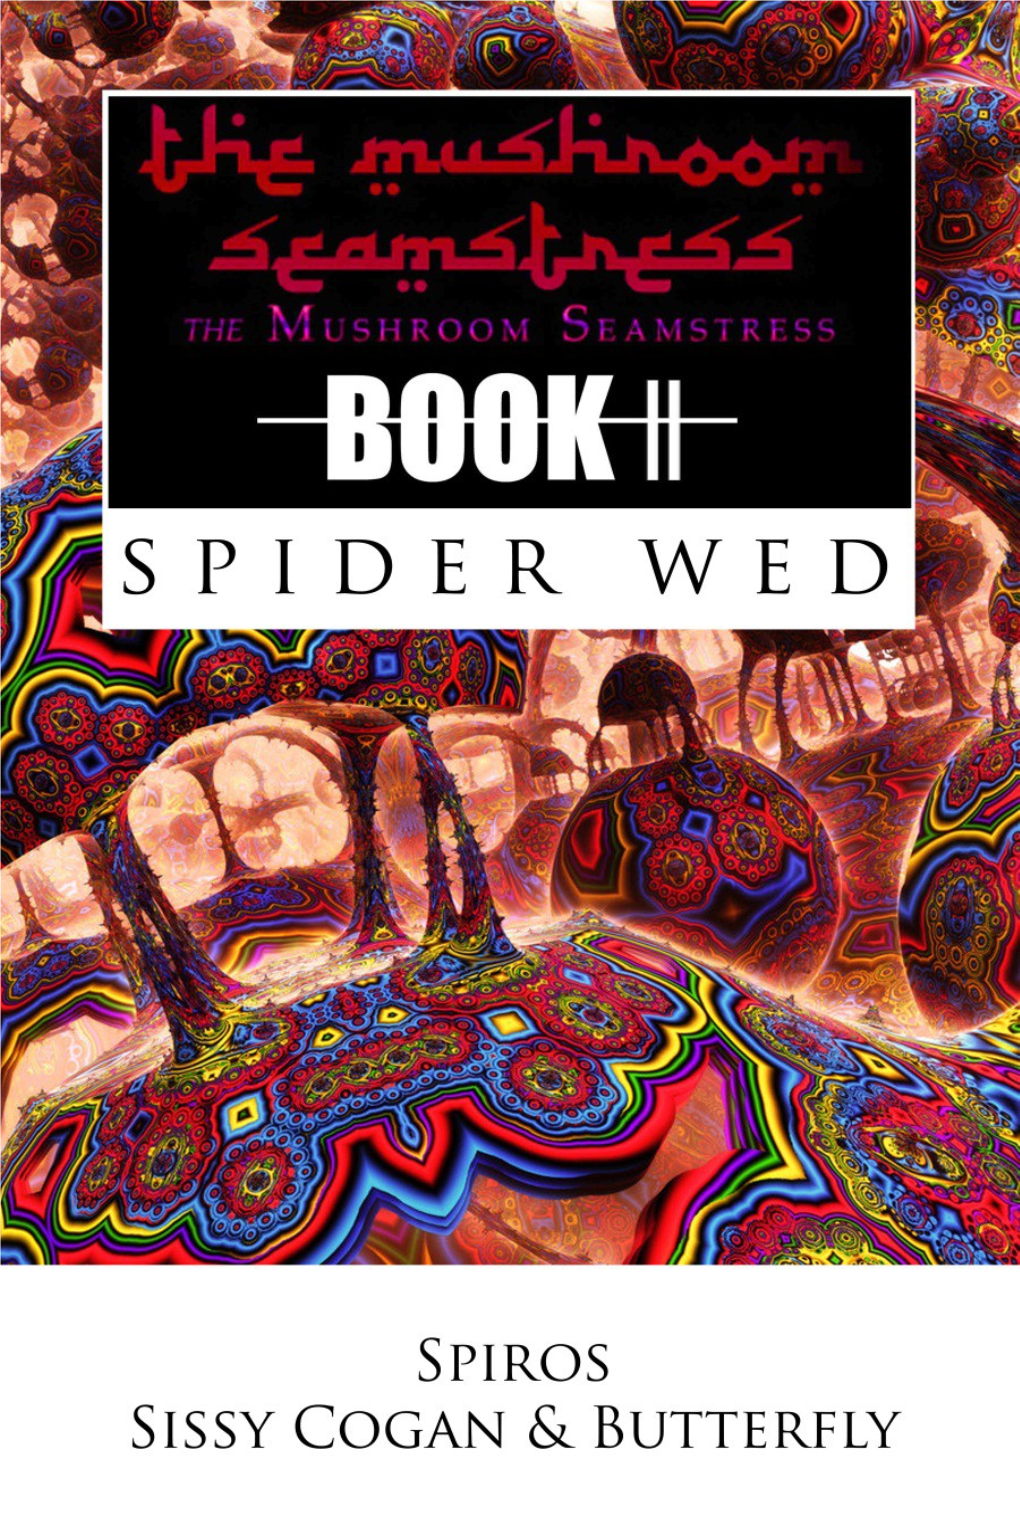 The Mushroom Seamstress - Book II ; Spider Wed